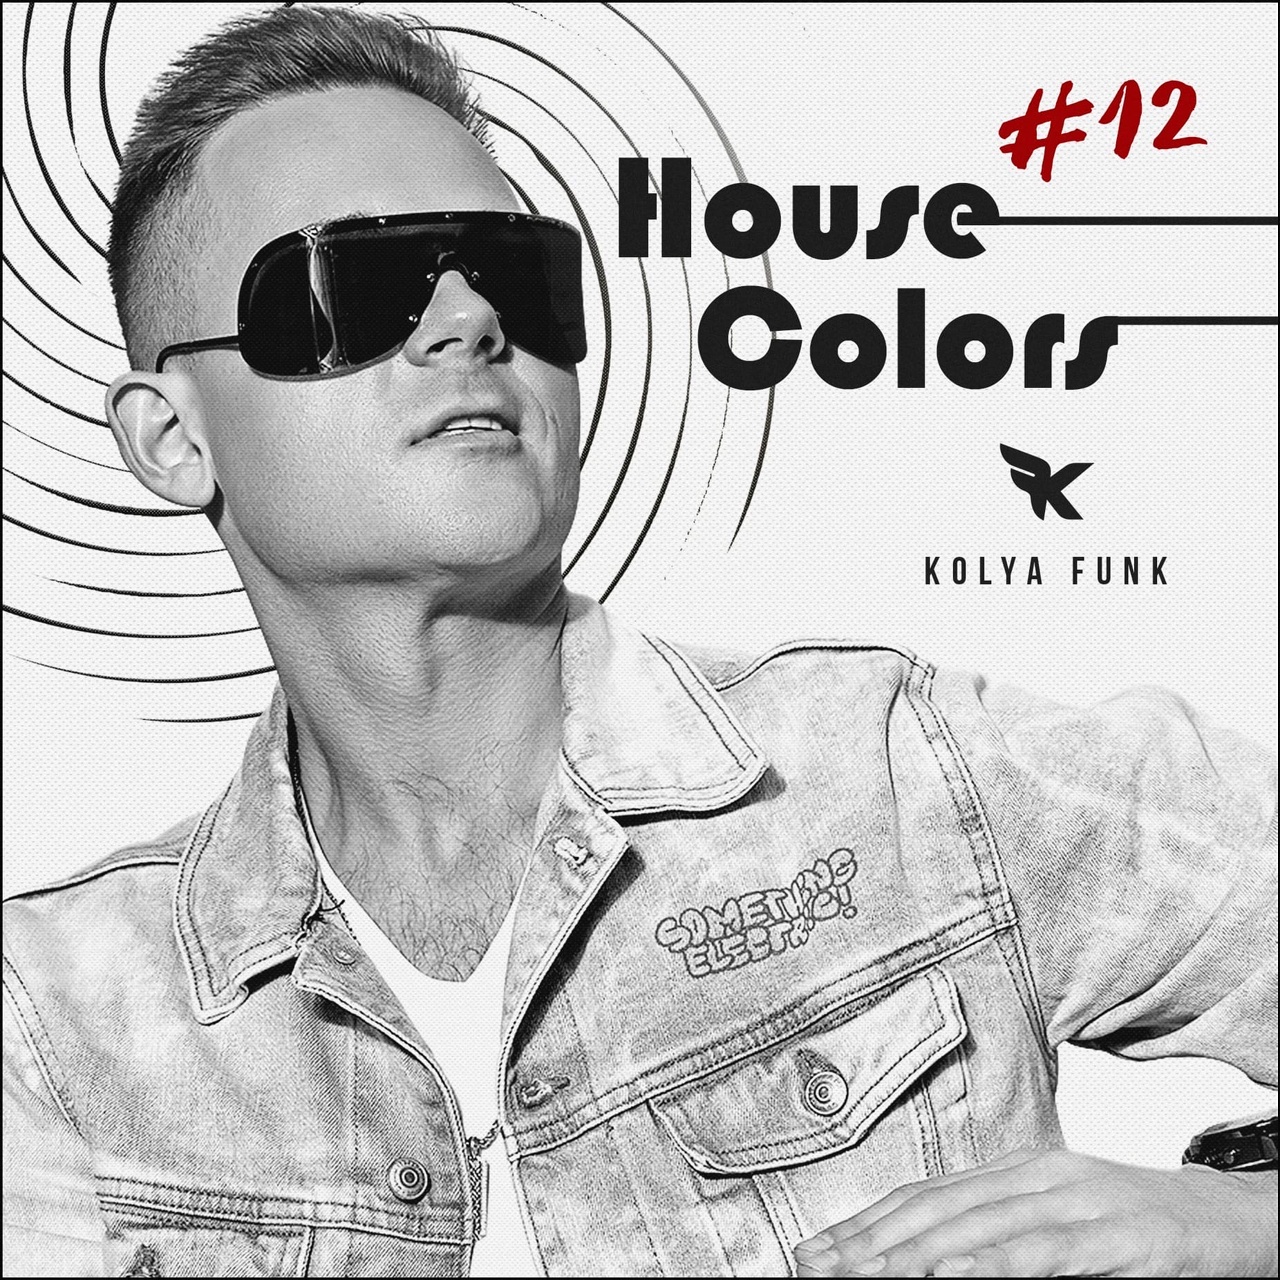 Download Kolya Funk - House Colors #012